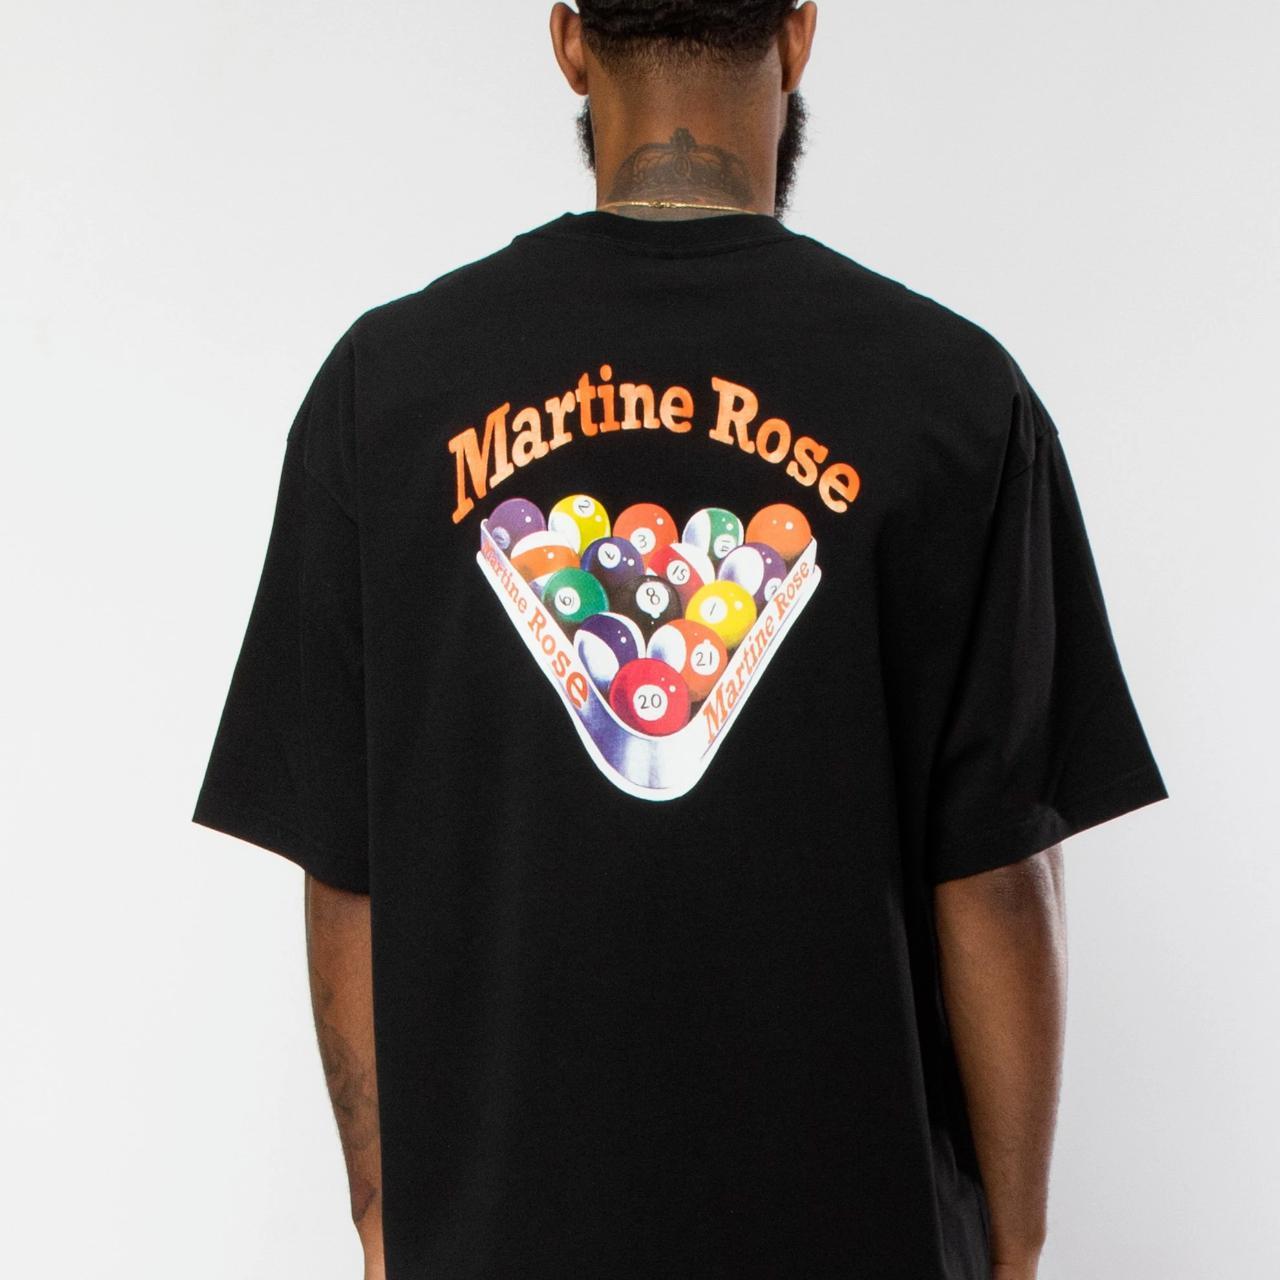 Martine Rose Men's T-shirt